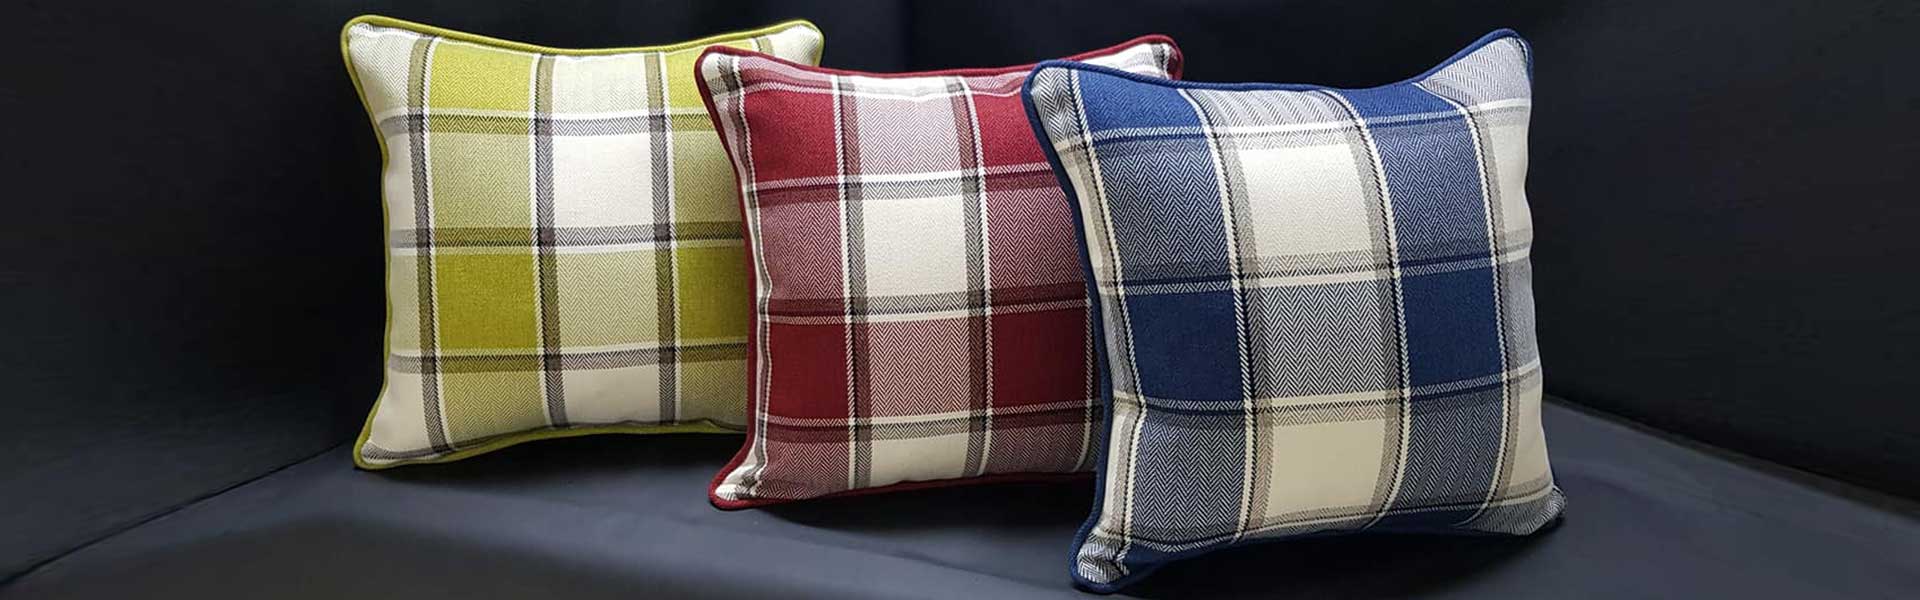 wholesale cushions cushion covers